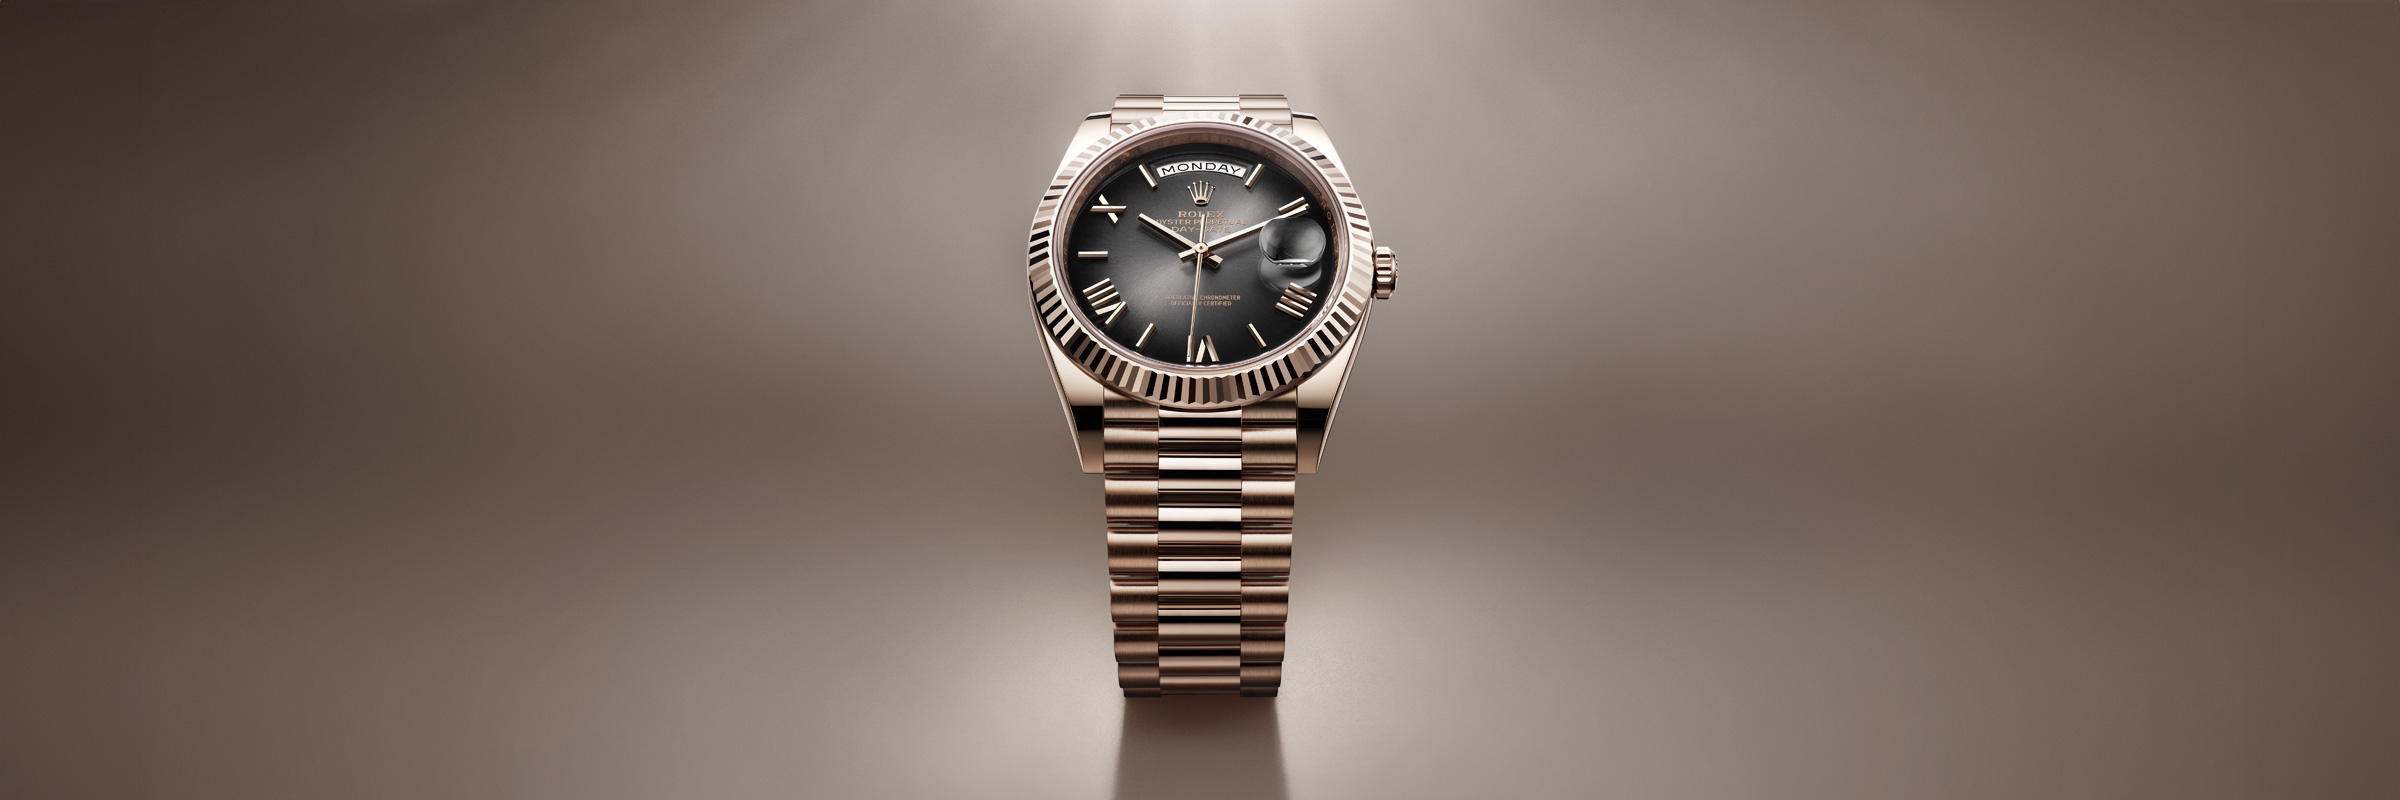 Rolex Day-Date watches